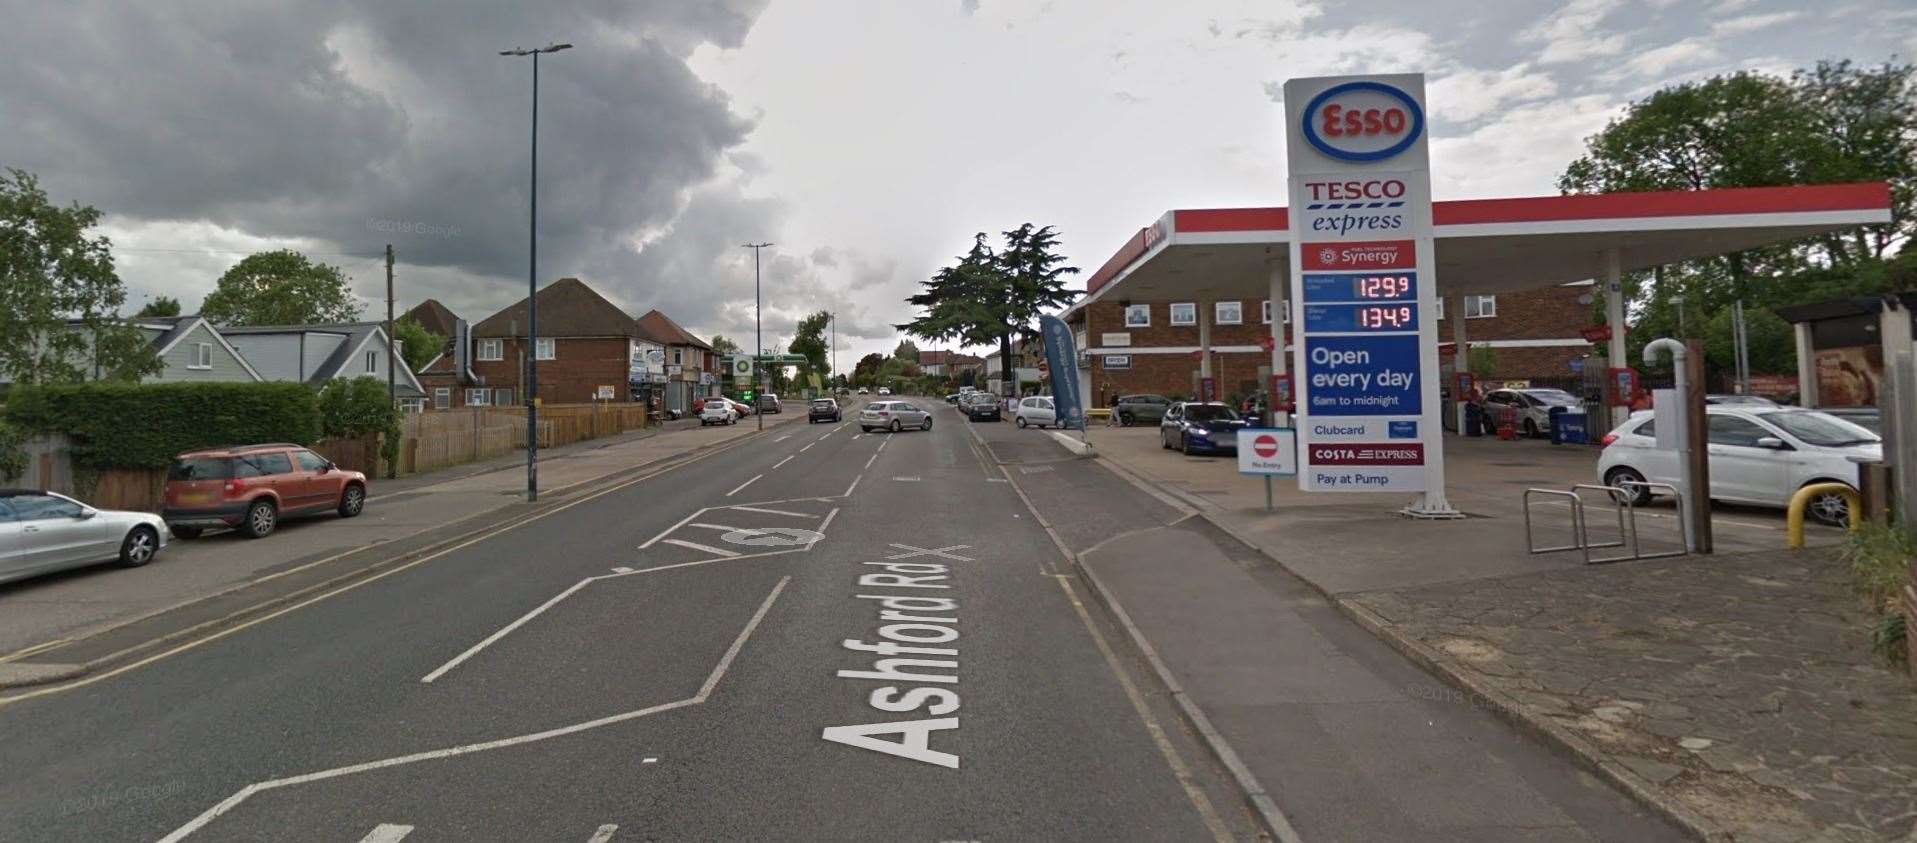 Residents say Ashford Road near Tesco Express is a speeding hotspot. Picture: Google Street View